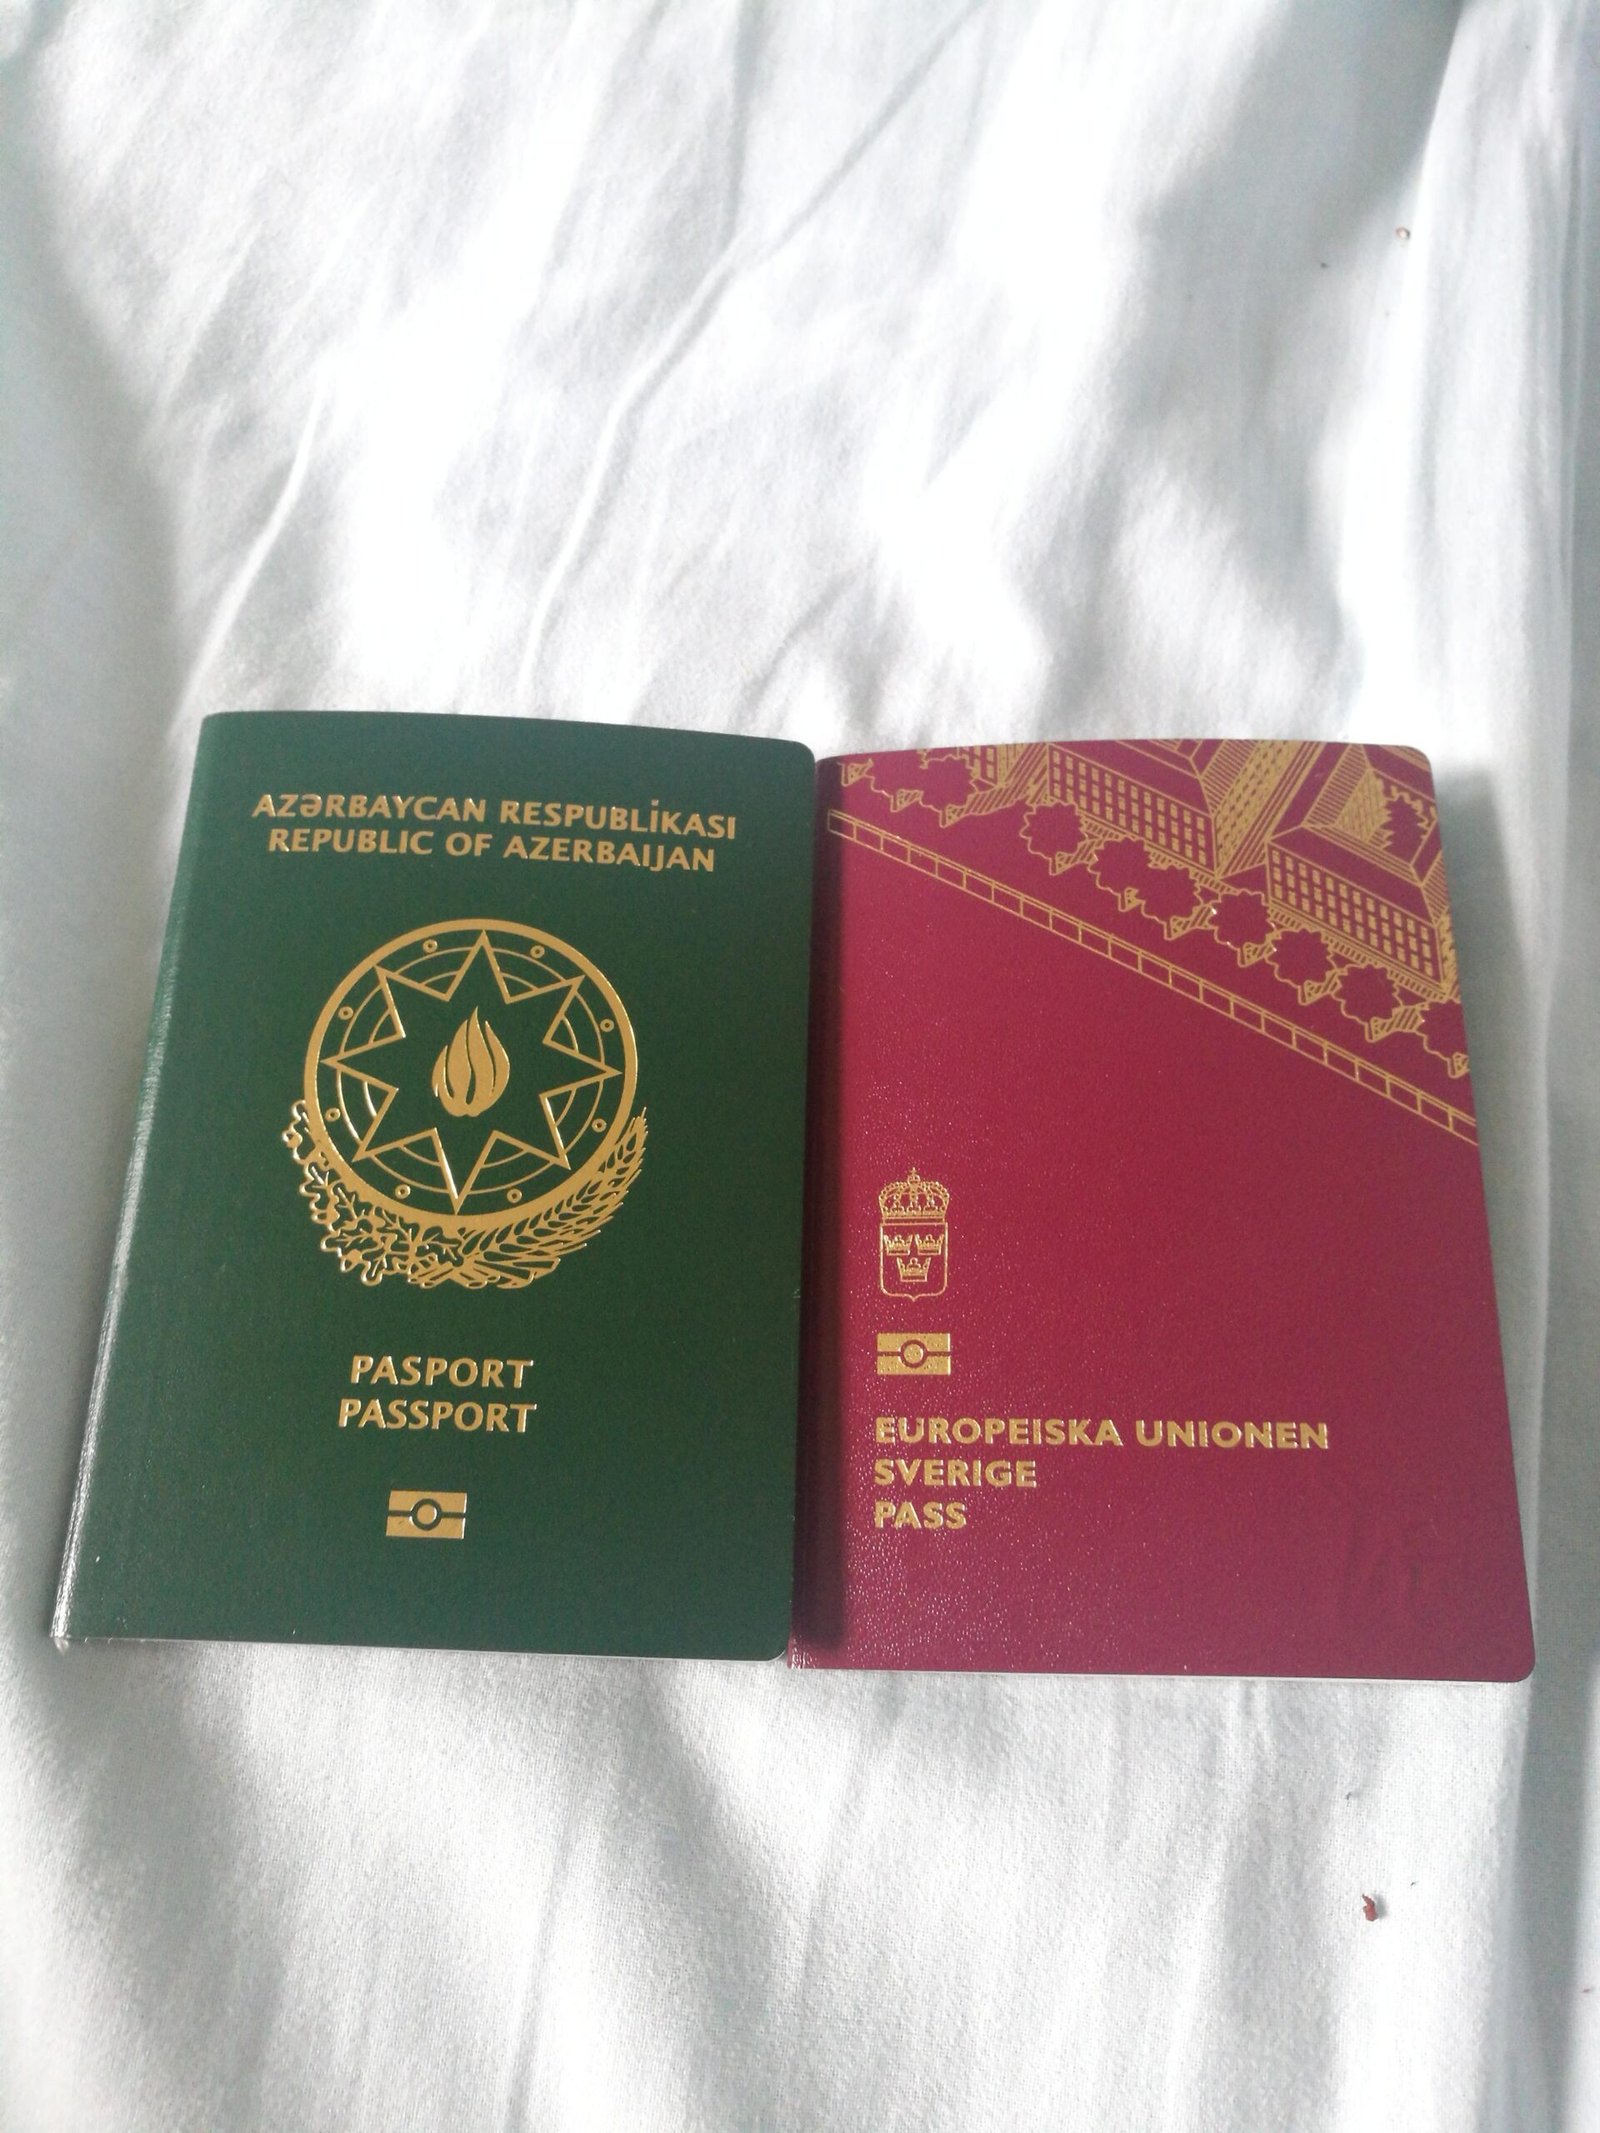 Köp svenskt pass